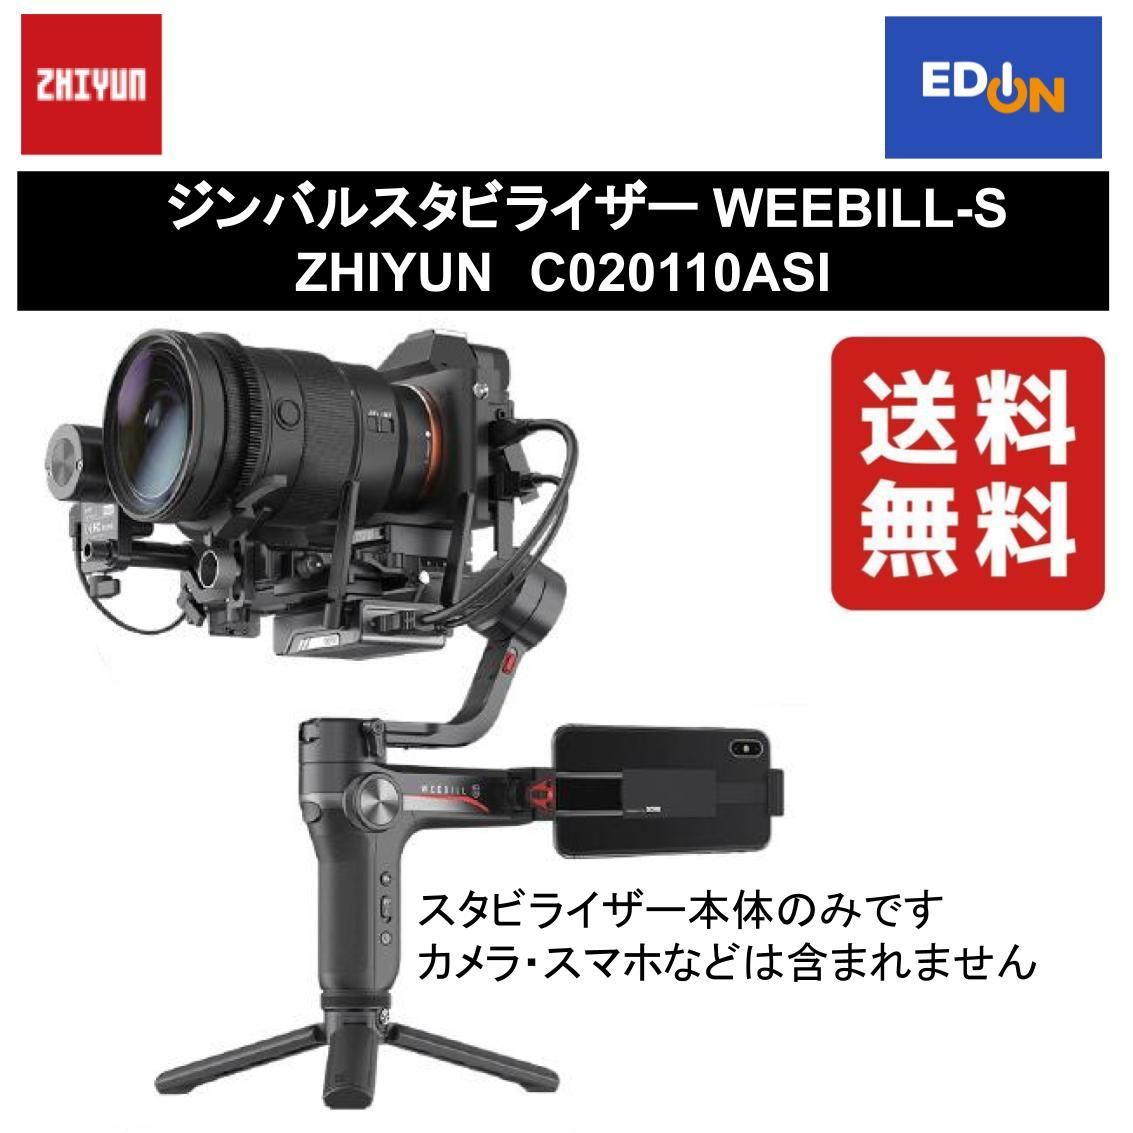 WEEBILL S C020110ASI - カメラ